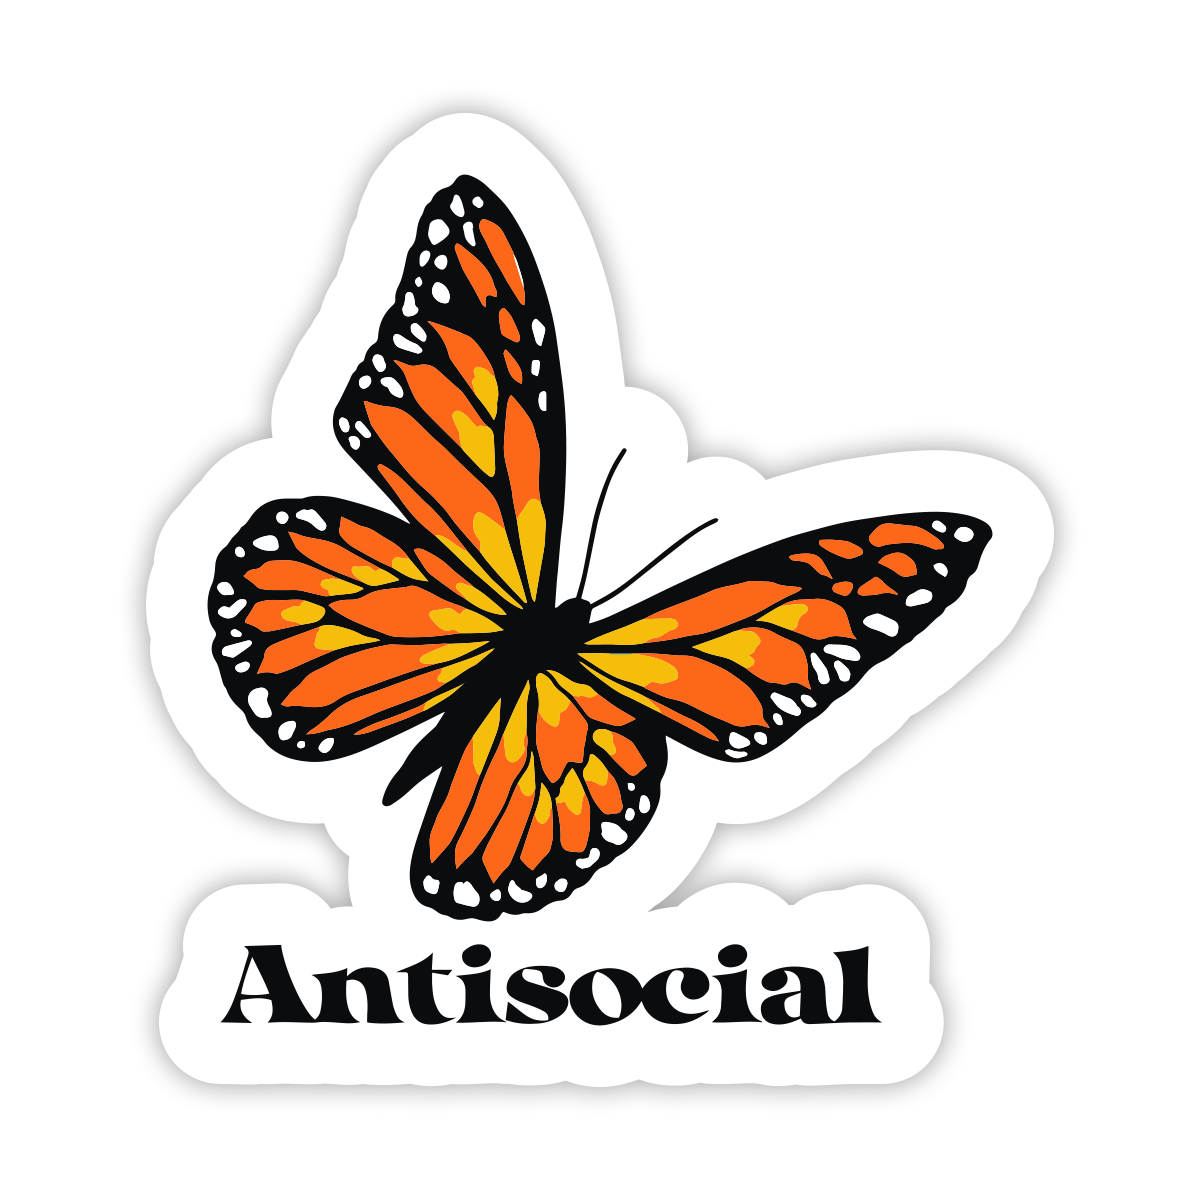 Antisocial Monarch Sticker